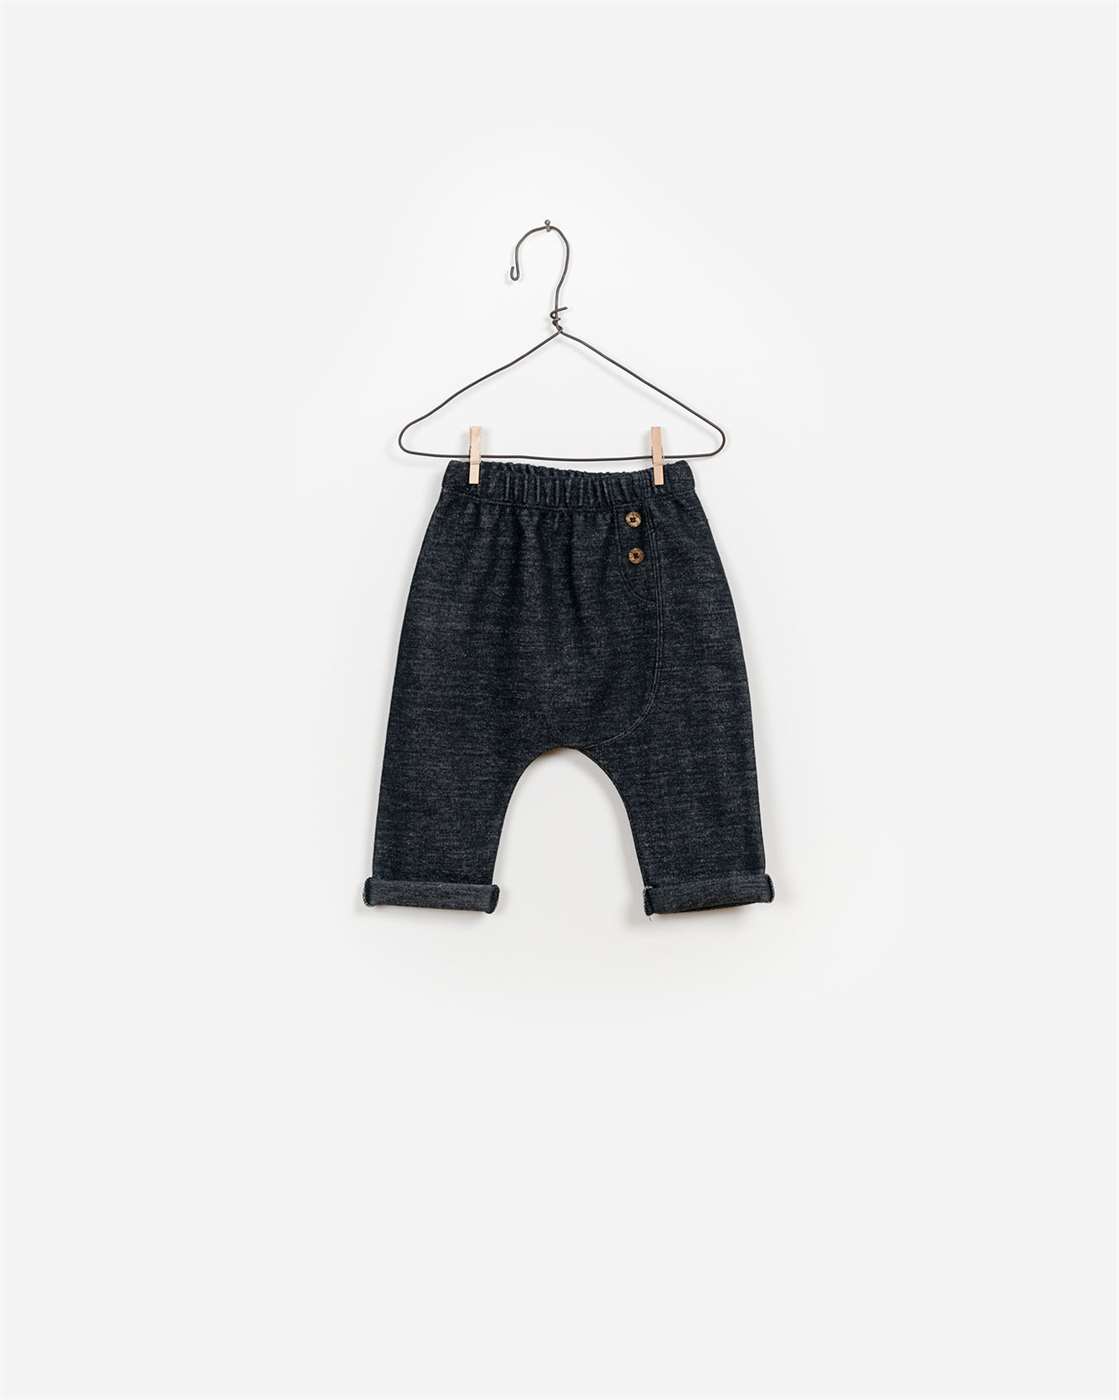 BeeBoo|BeeBoo PlayUp vêtement bébé baby cloth Pantalon double face pants noir black